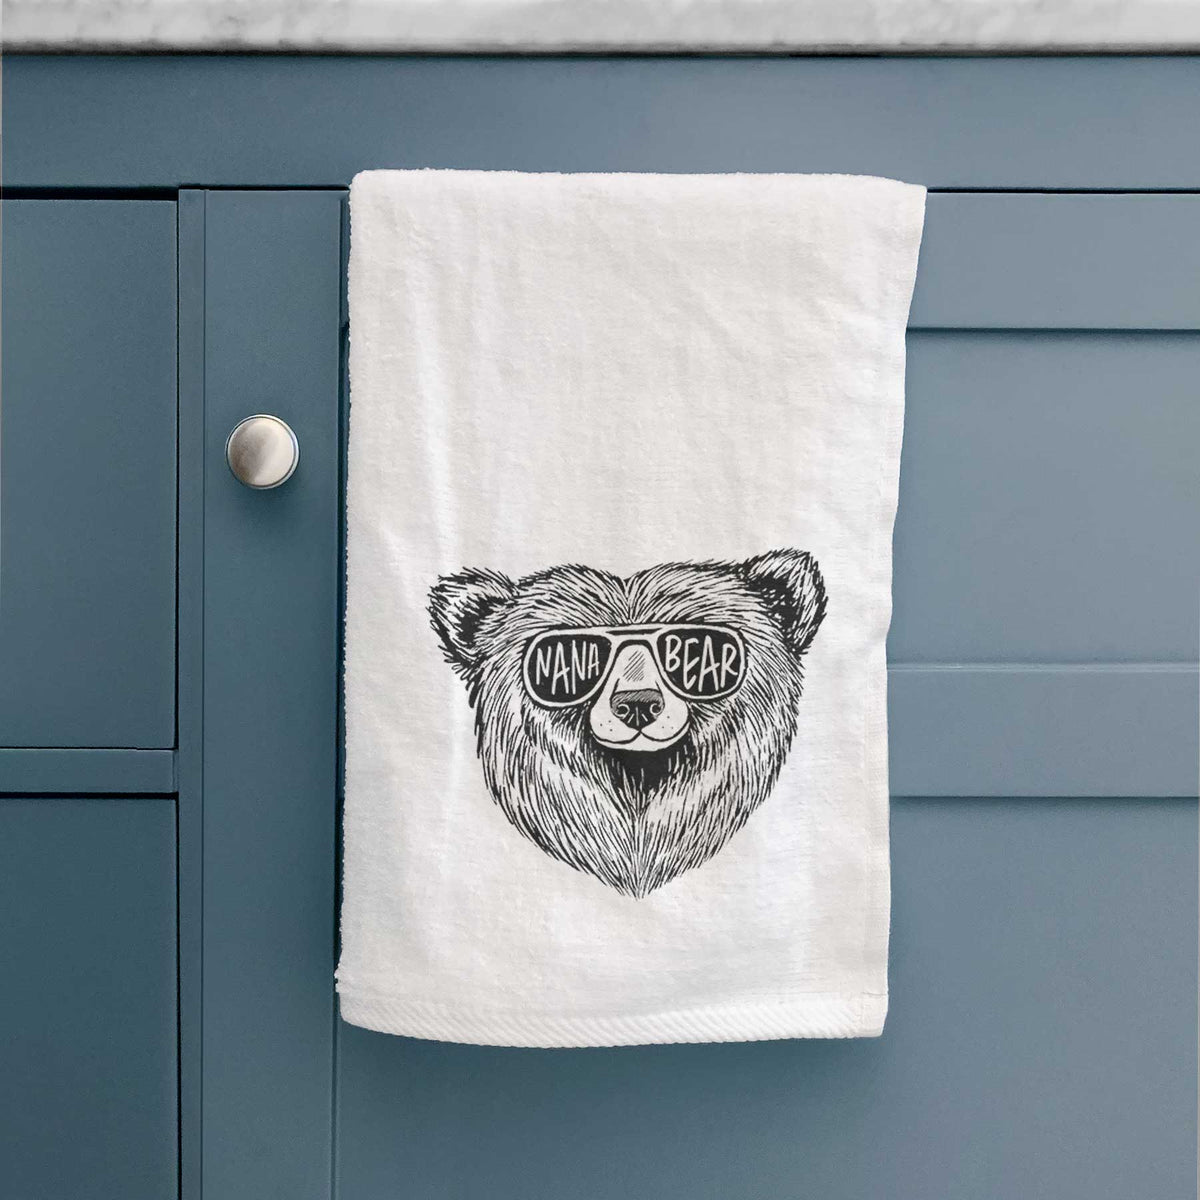 Nana Bear Hand Towel